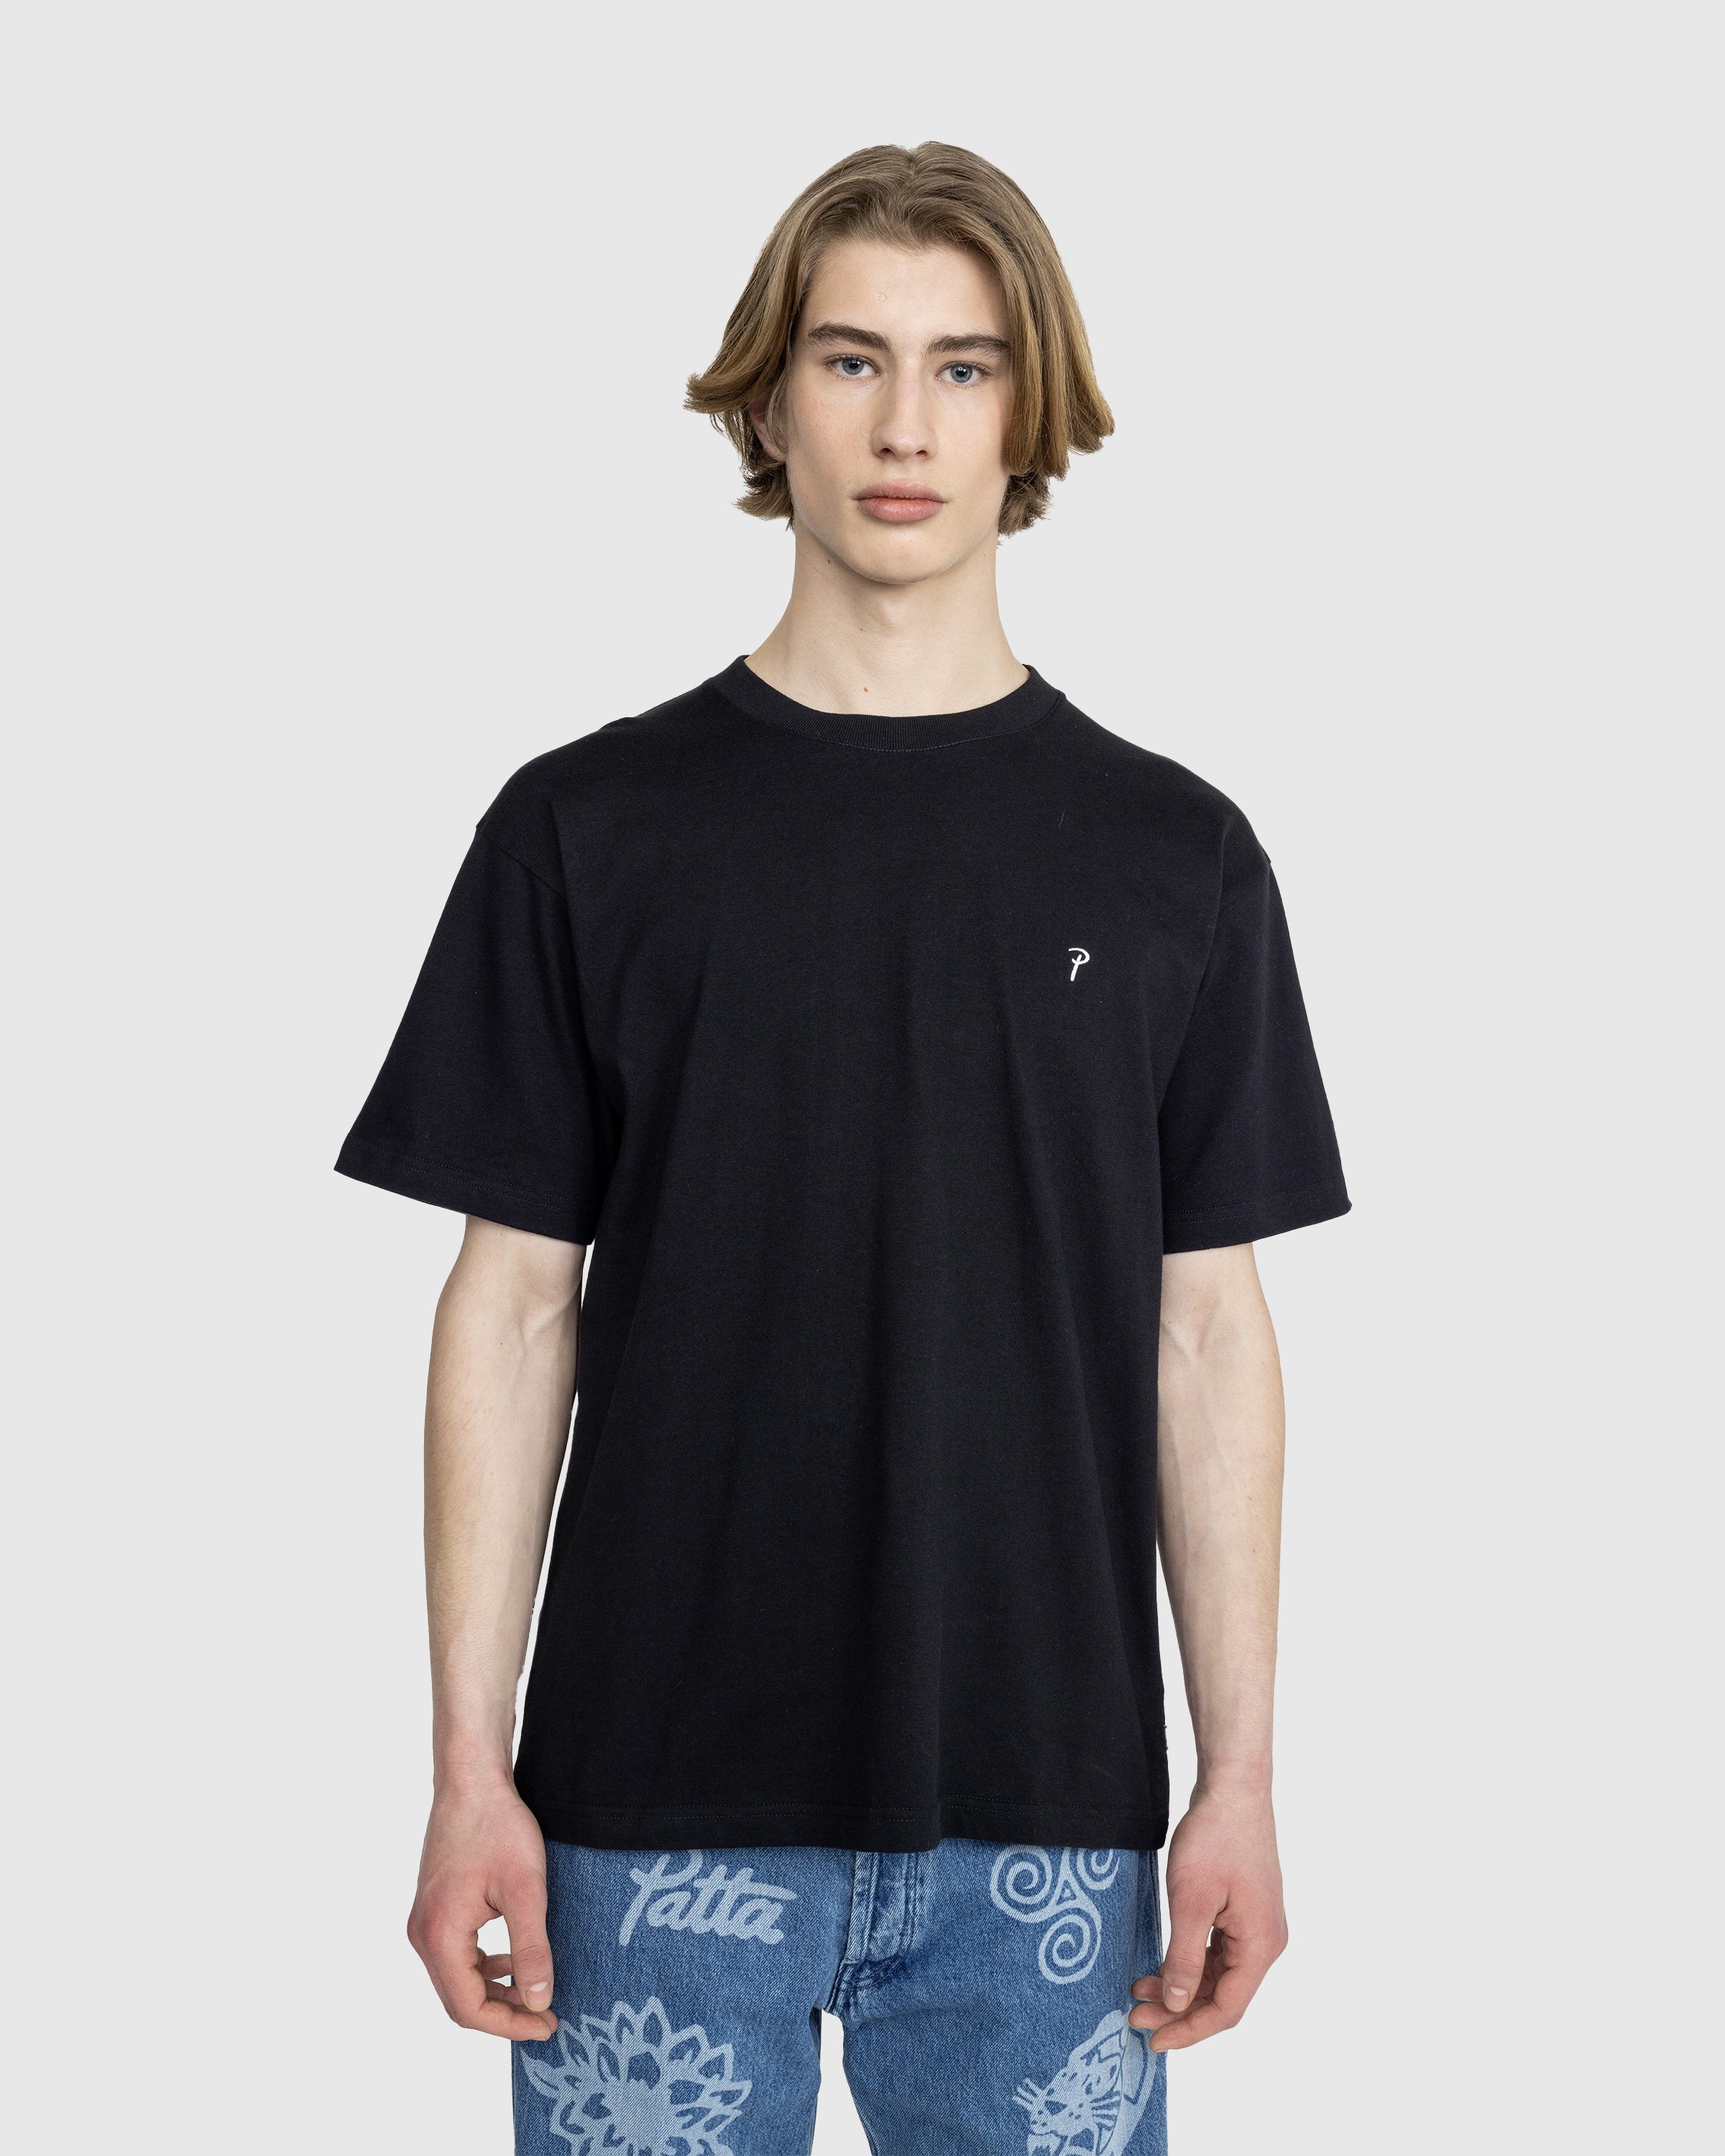 Patta - Basic Script P T-Shirt - Clothing - Black - Image 2